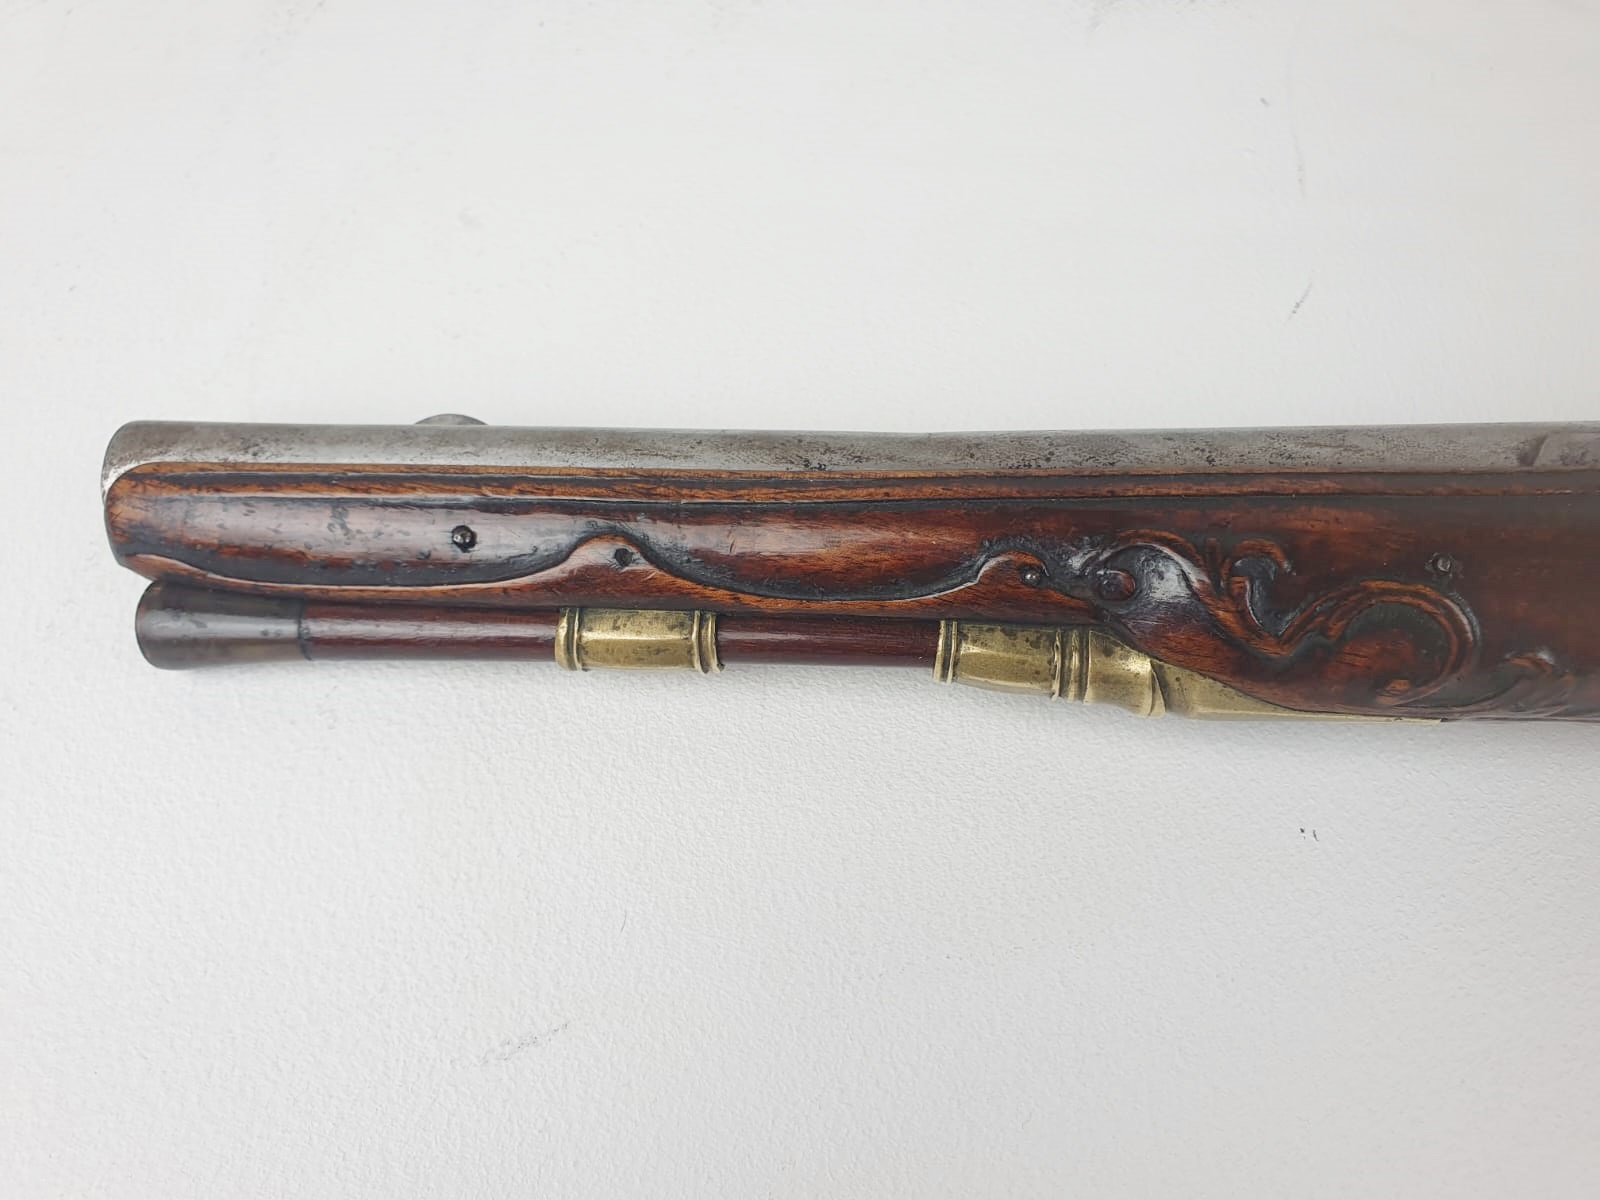 Flintlock pistol, fired around 1825